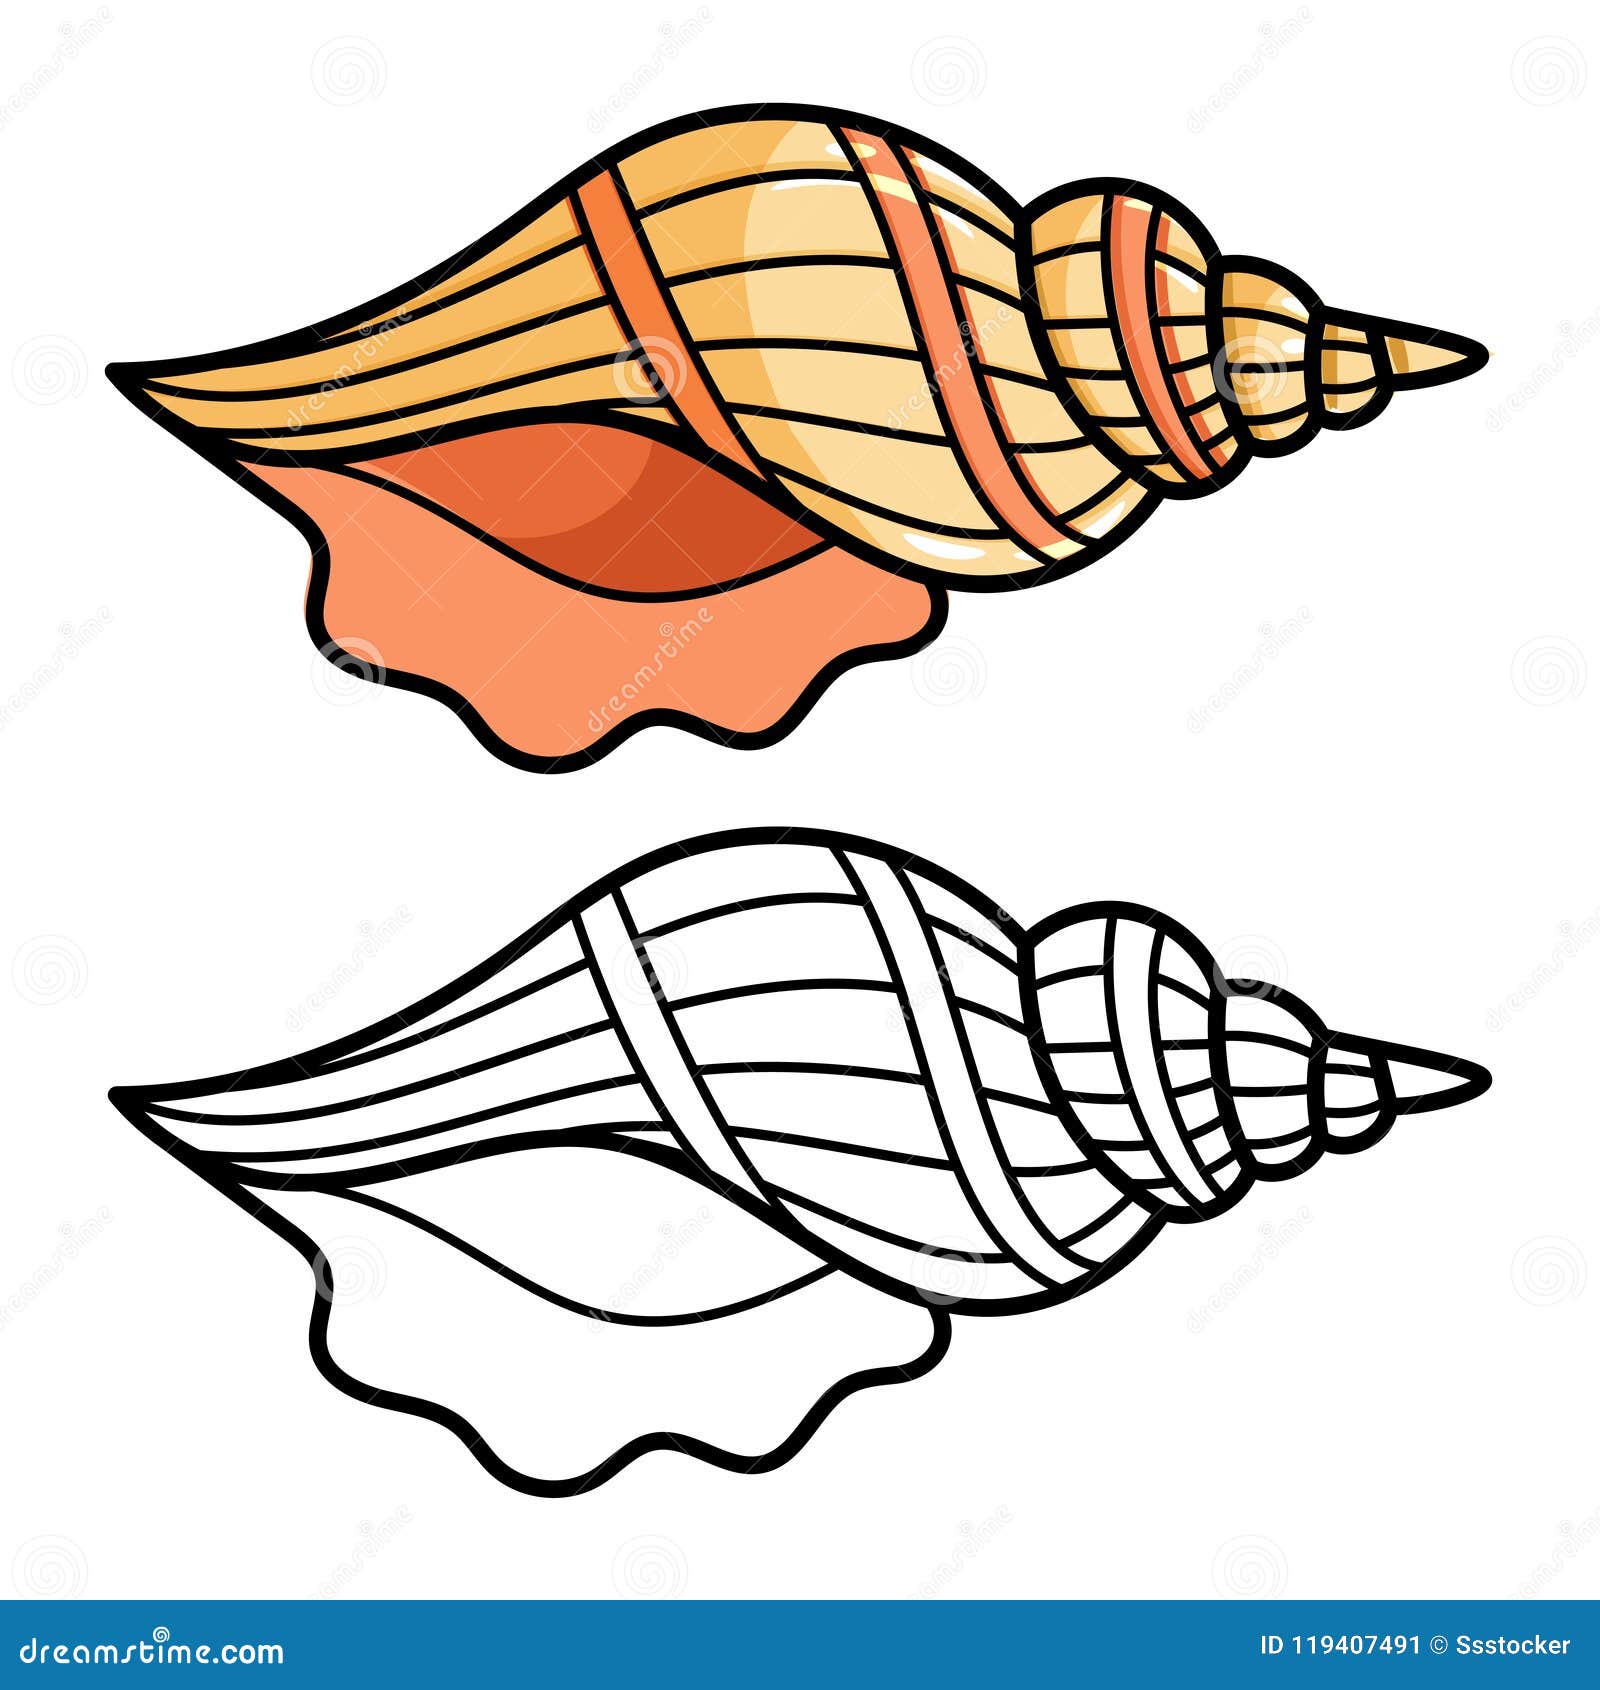 Cartoon Sea Shell Isolated on White Stock Vector - Illustration of natural,  marine: 119407491